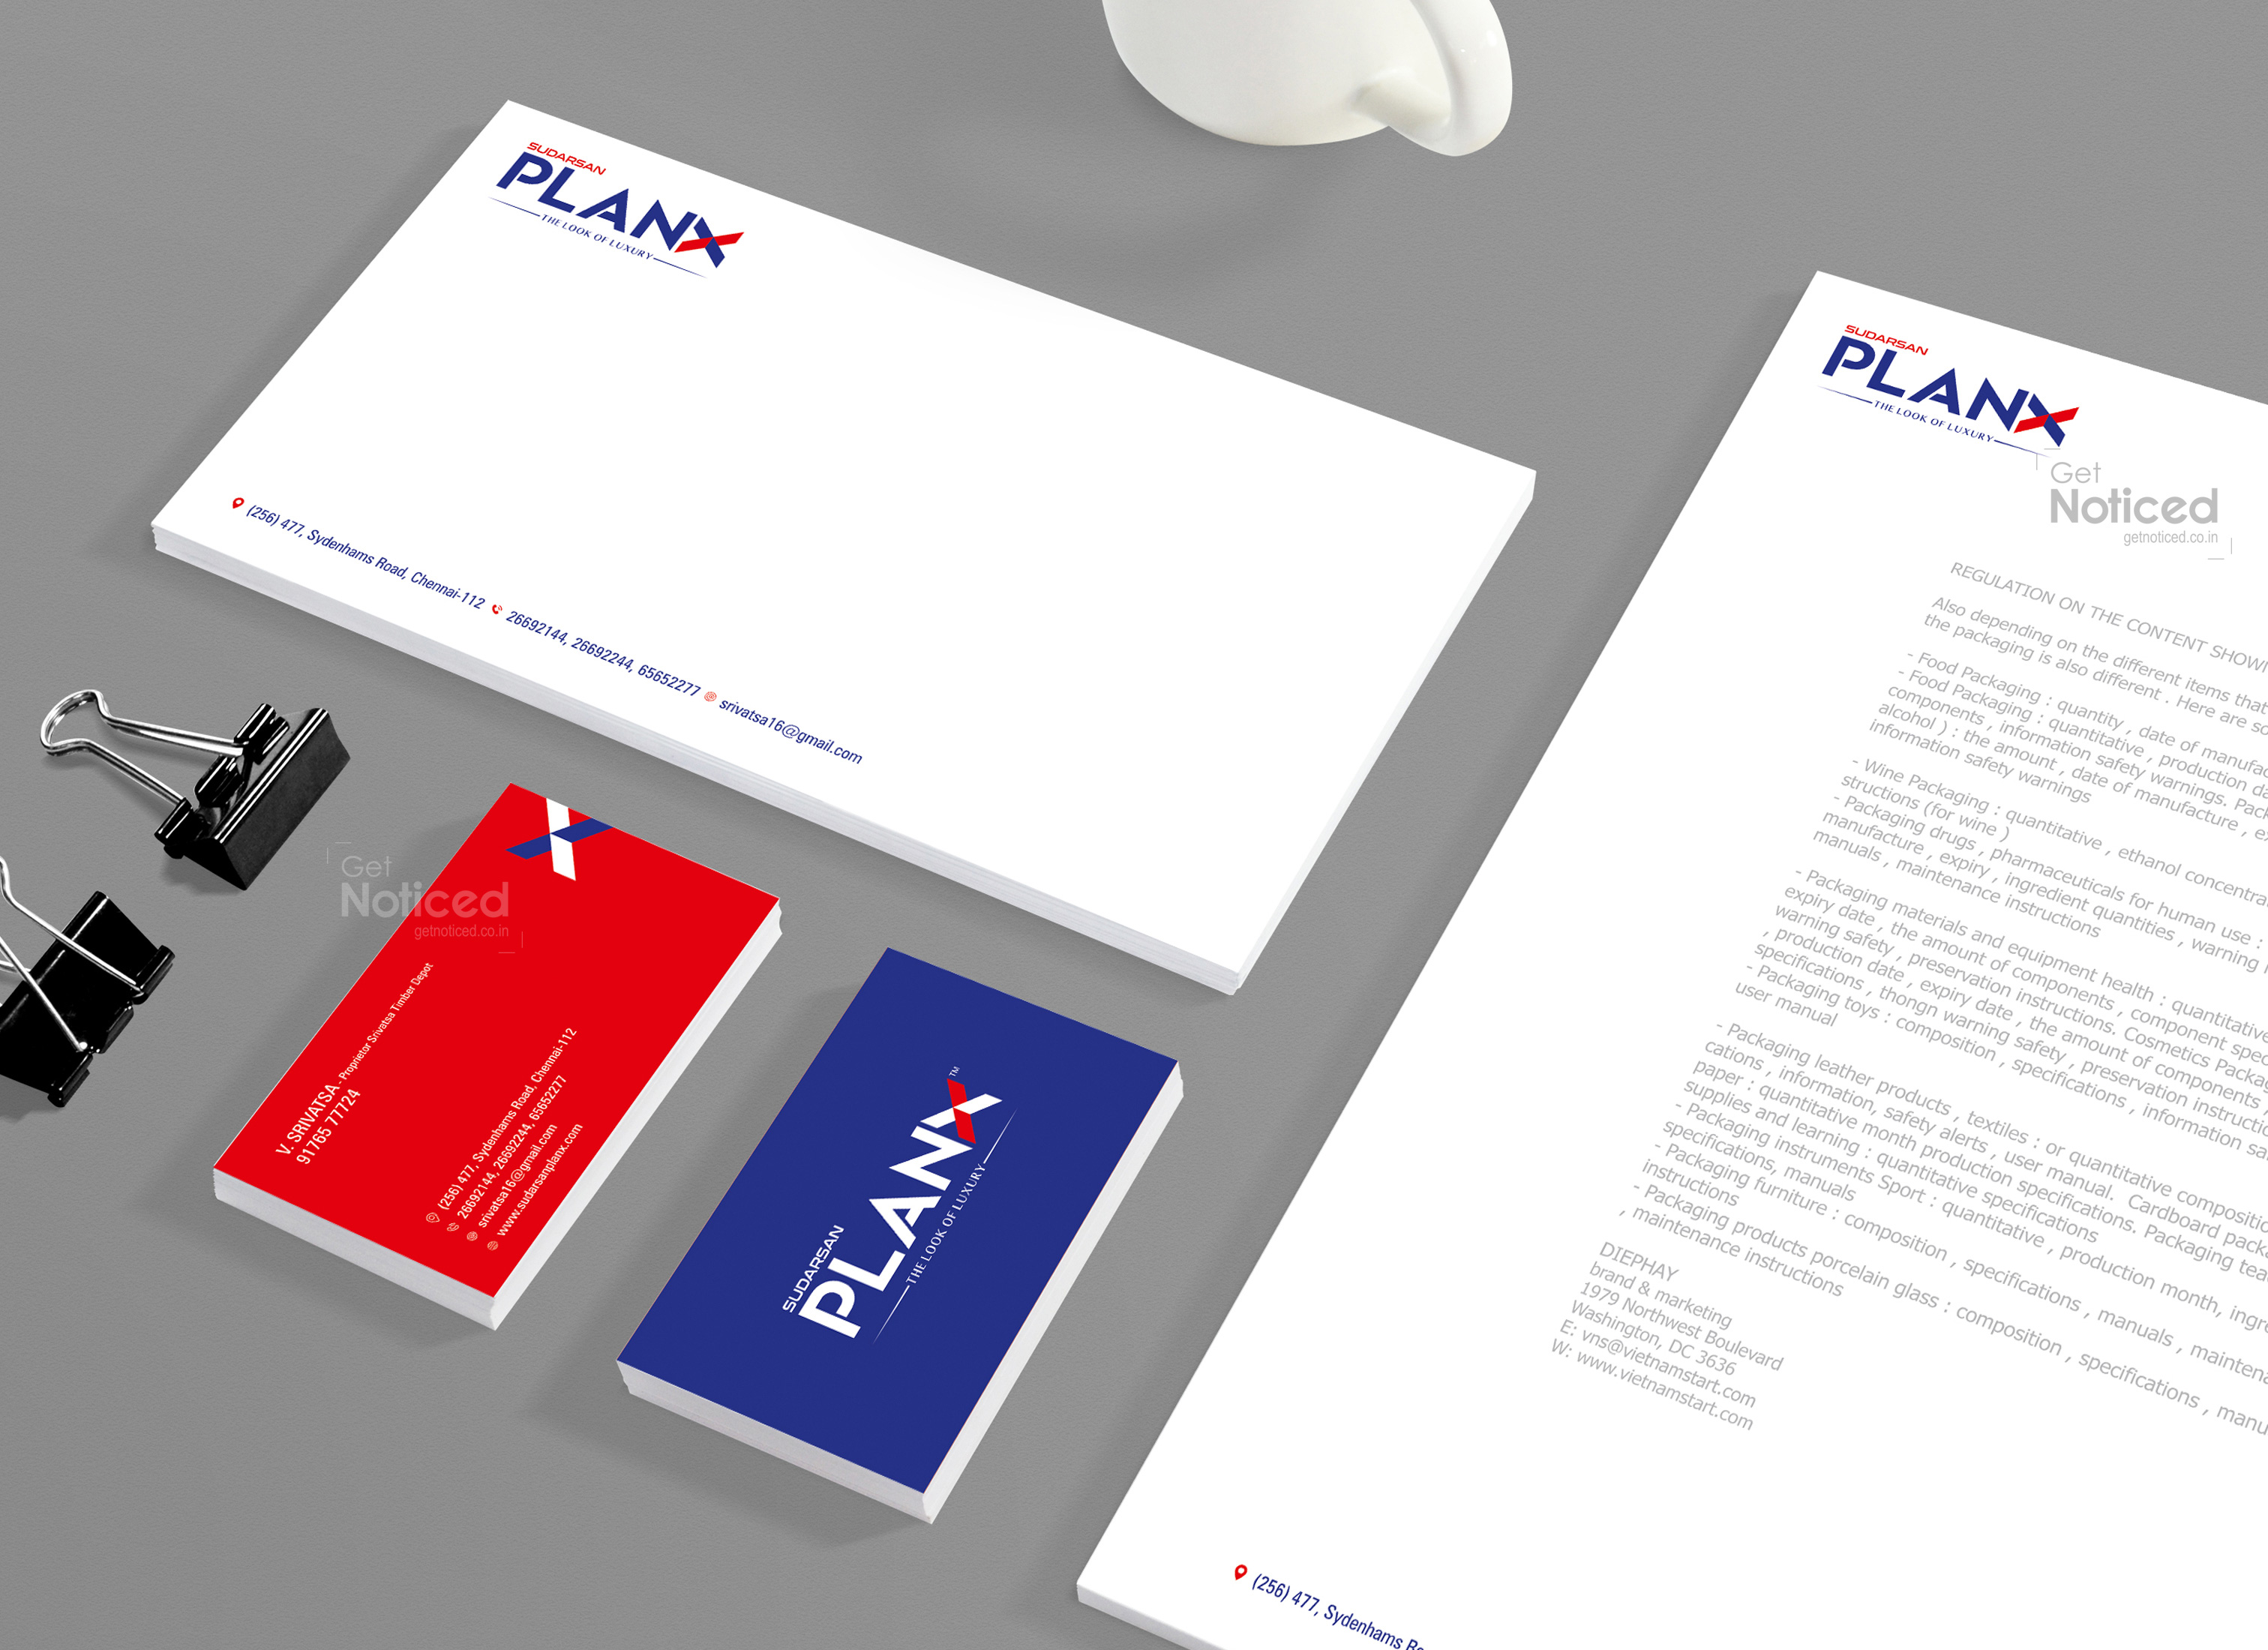 Planx Corporate Identity Design